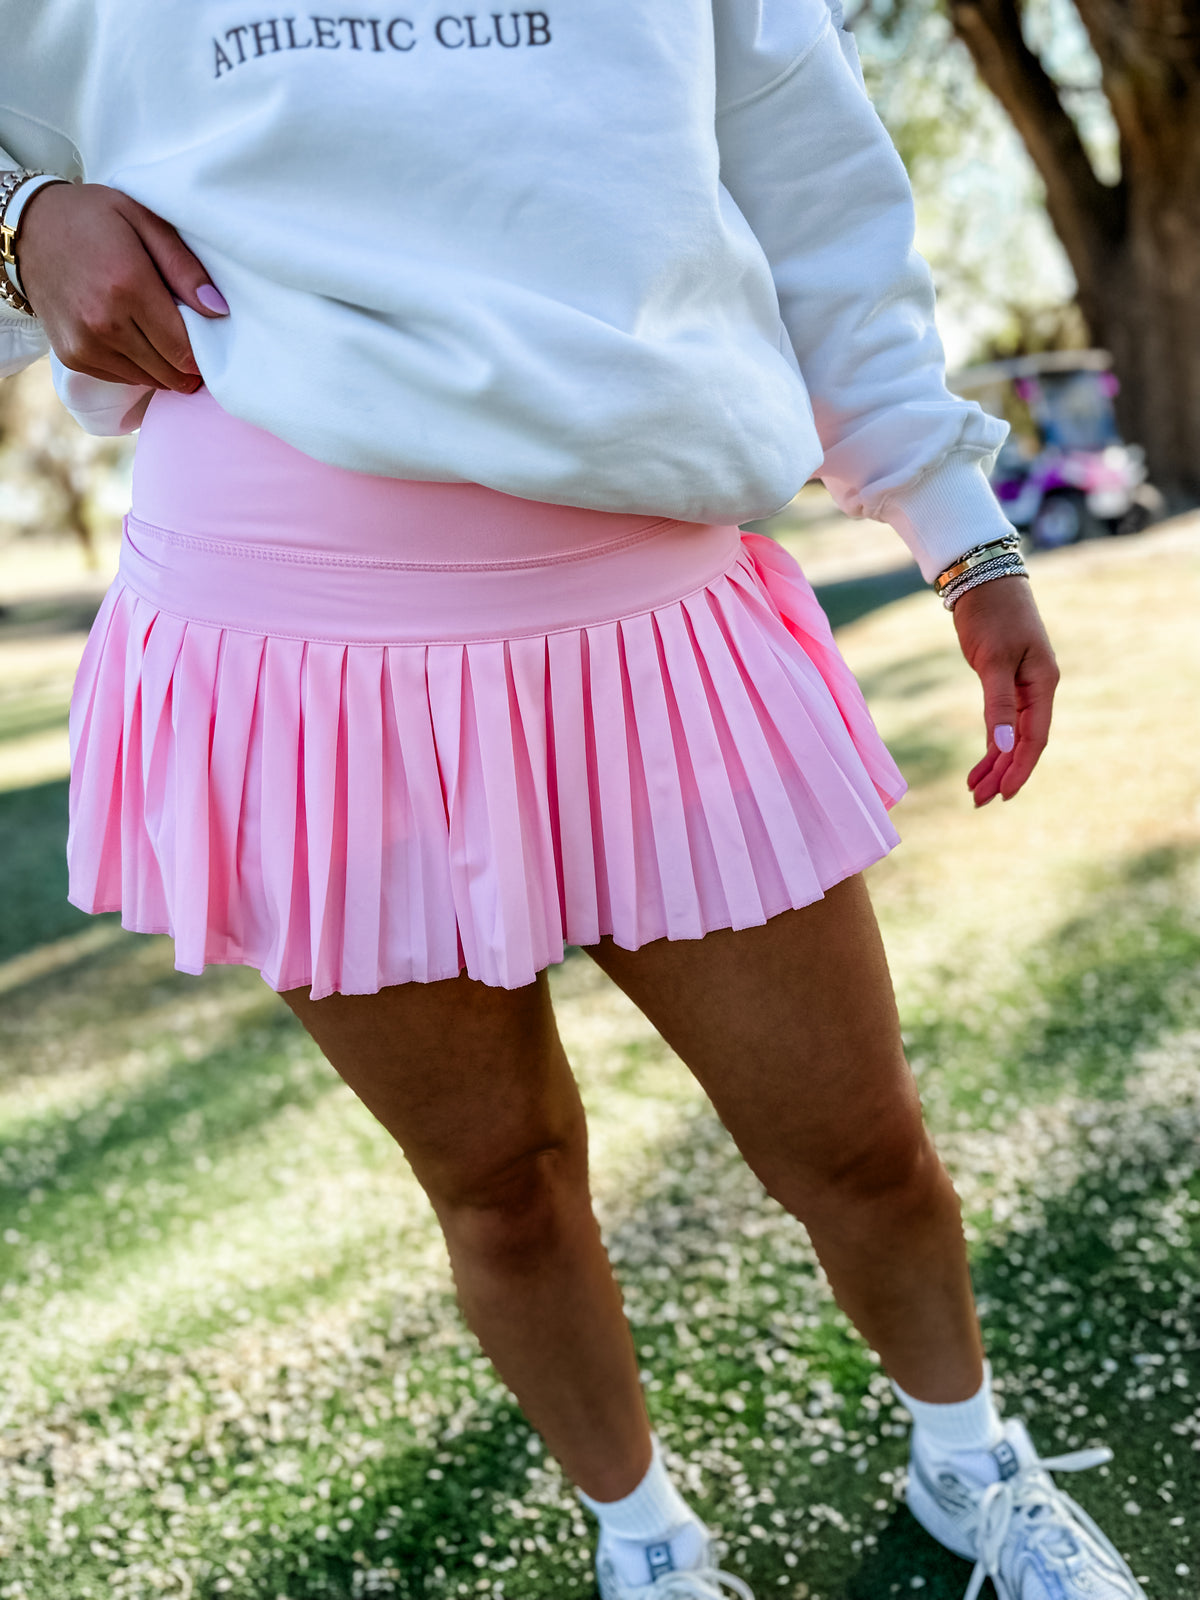 Pleated Tennis Skirt - 8 Colors